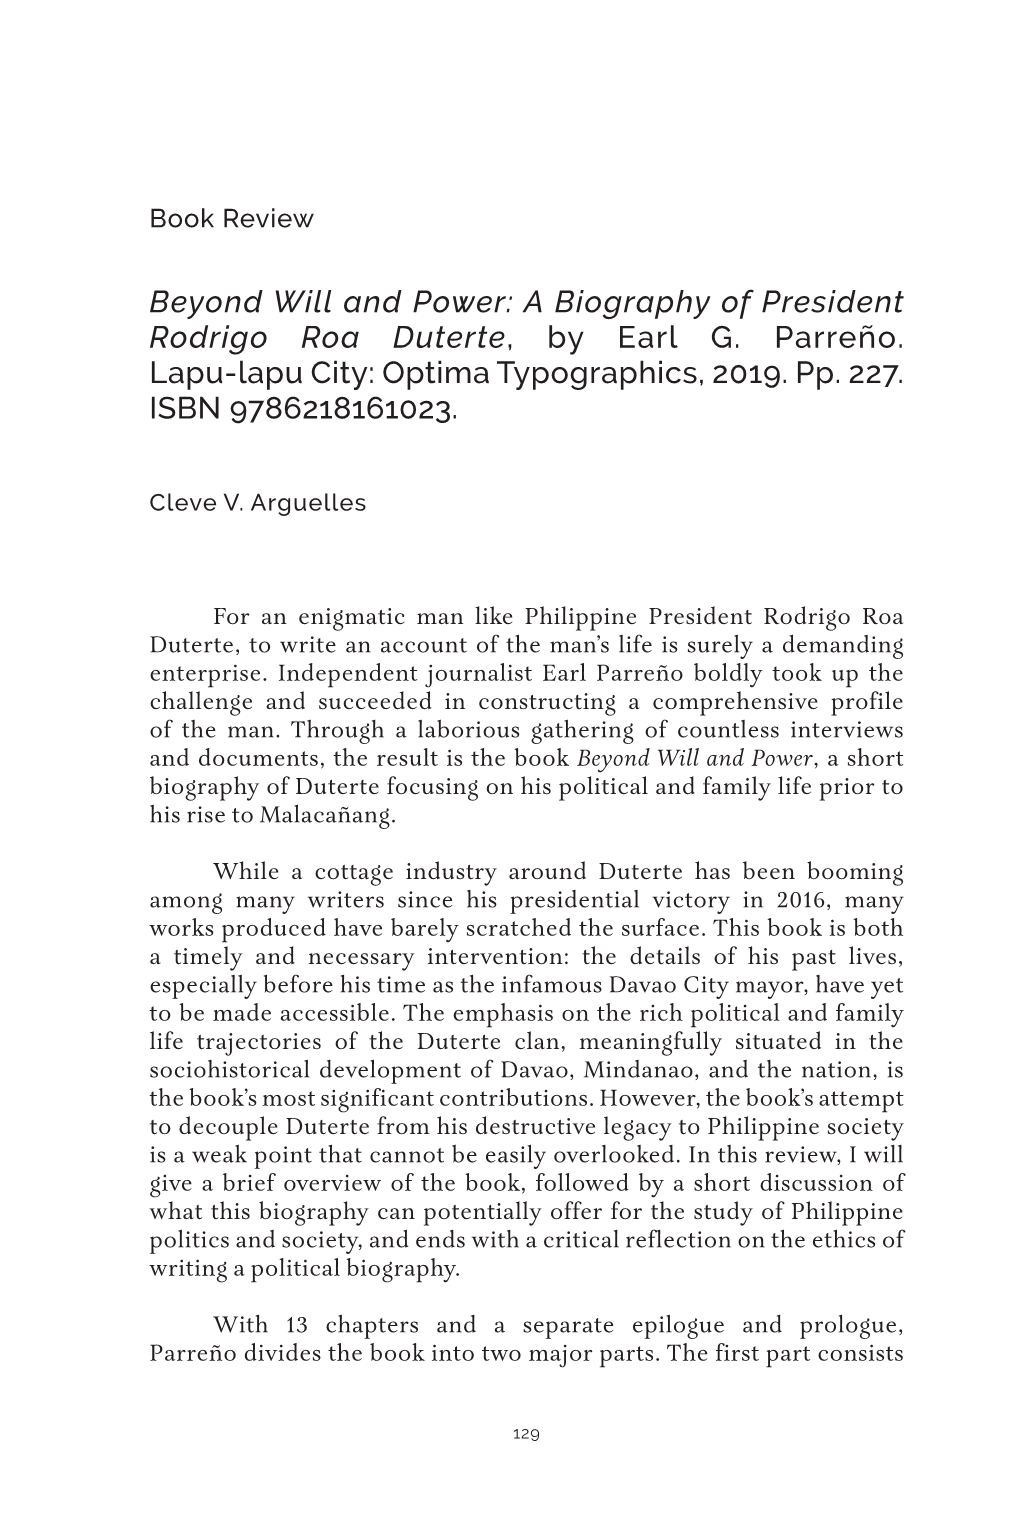 A Biography of President Rodrigo Roa Duterte, by Earl G